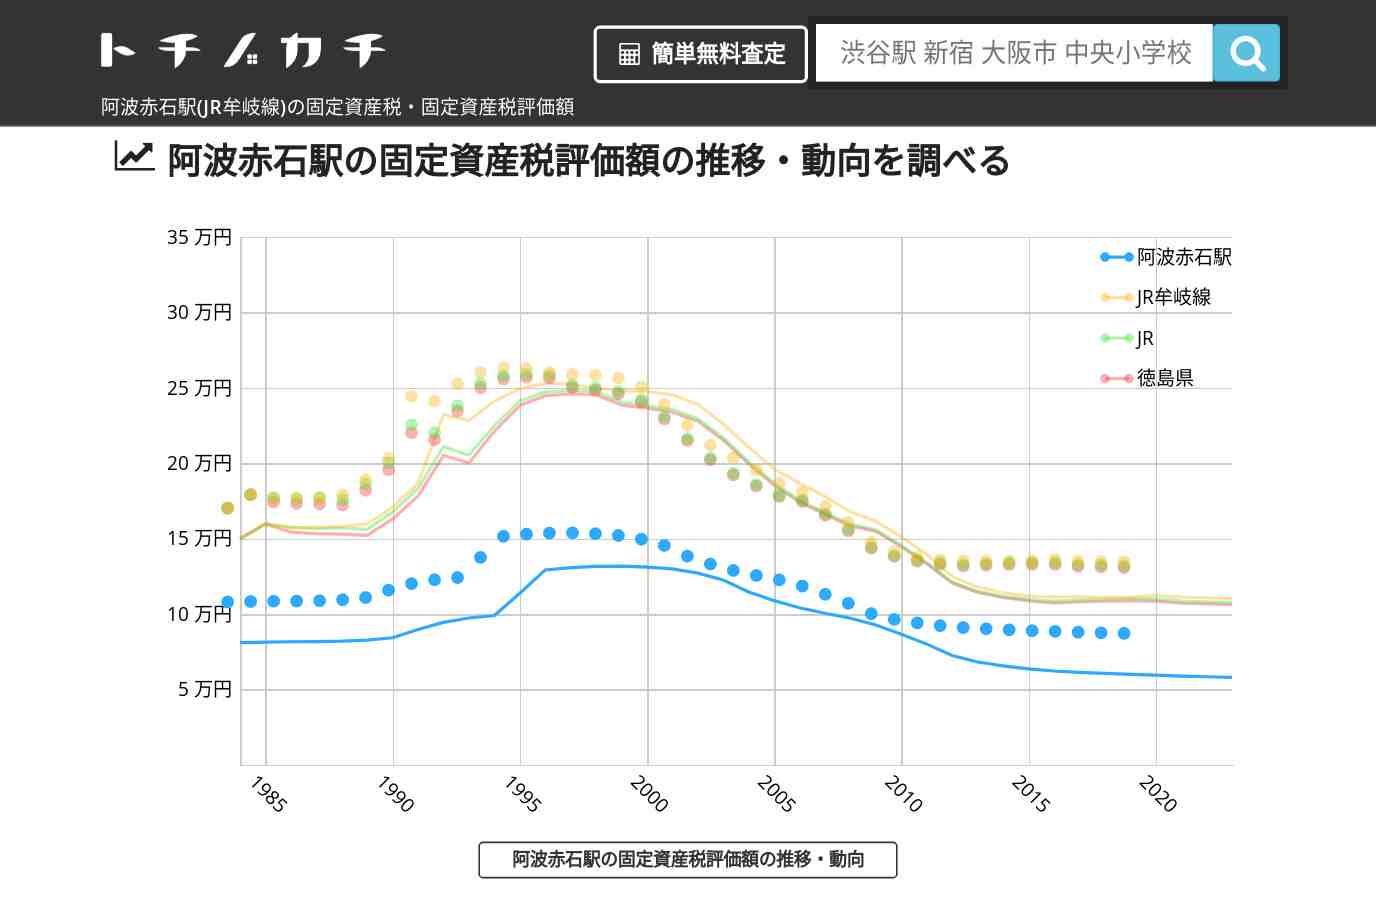 阿波赤石駅(JR牟岐線)の固定資産税・固定資産税評価額 | トチノカチ